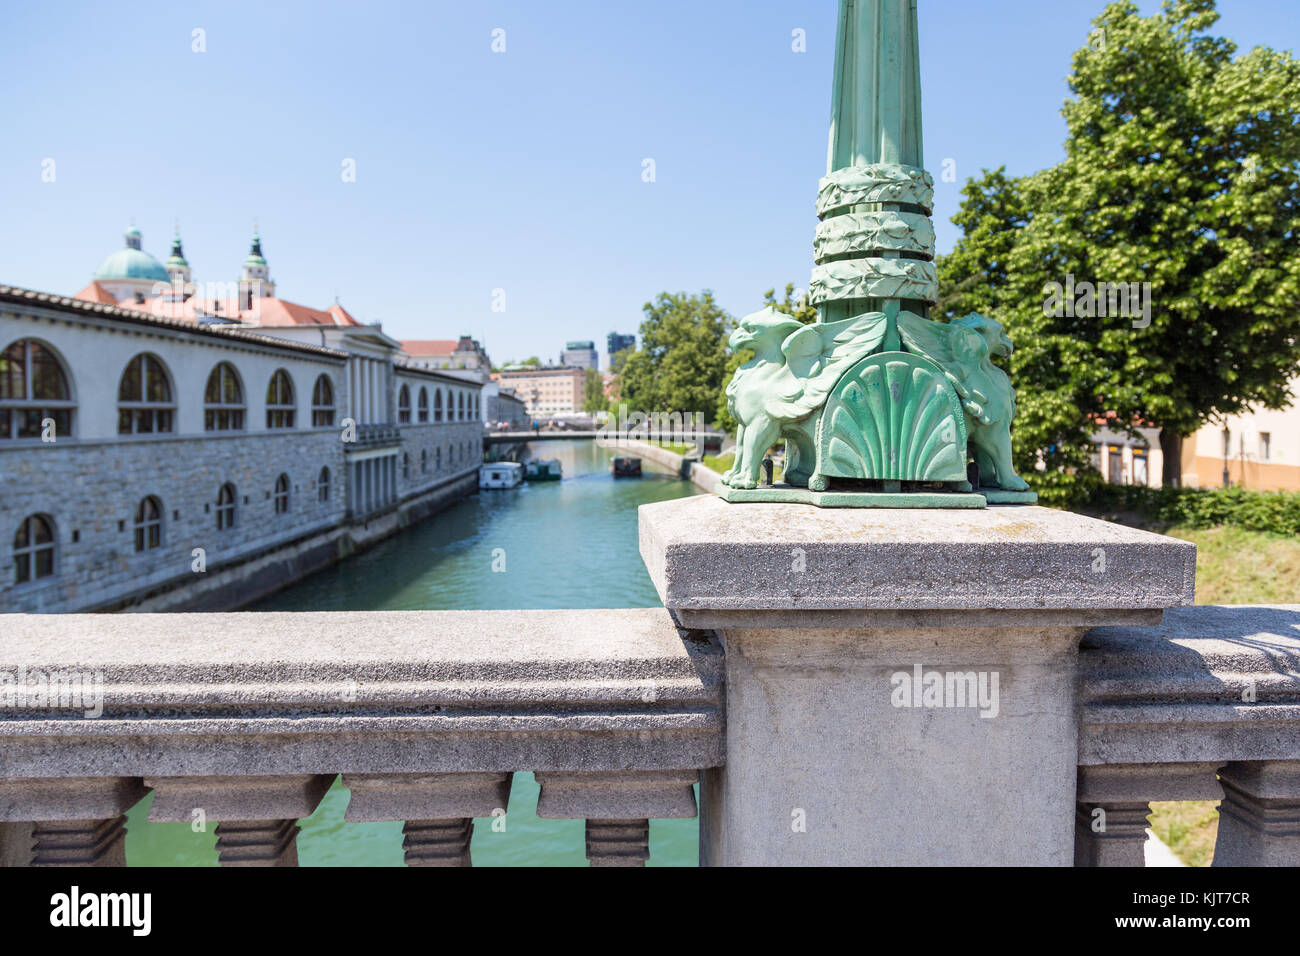 View from the dragon bridge over the ljubljanica river with dragon details in lamp posts in  Ljubljana, Slovenia Stock Photo